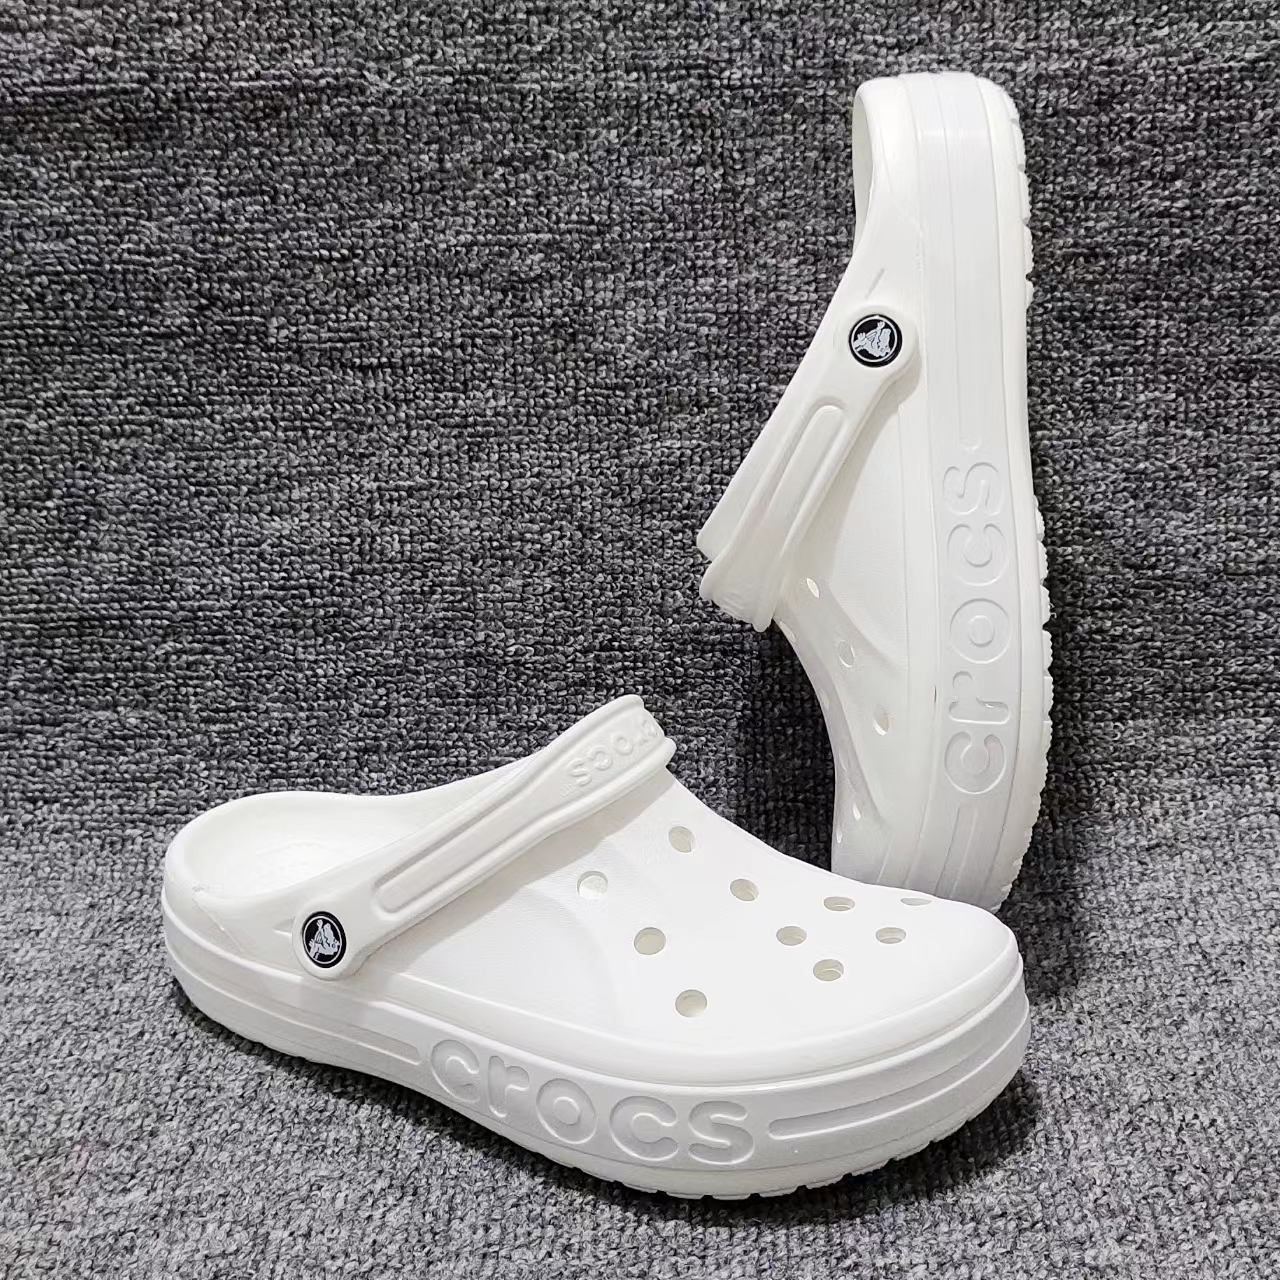 Buy Crocs Imitation online 